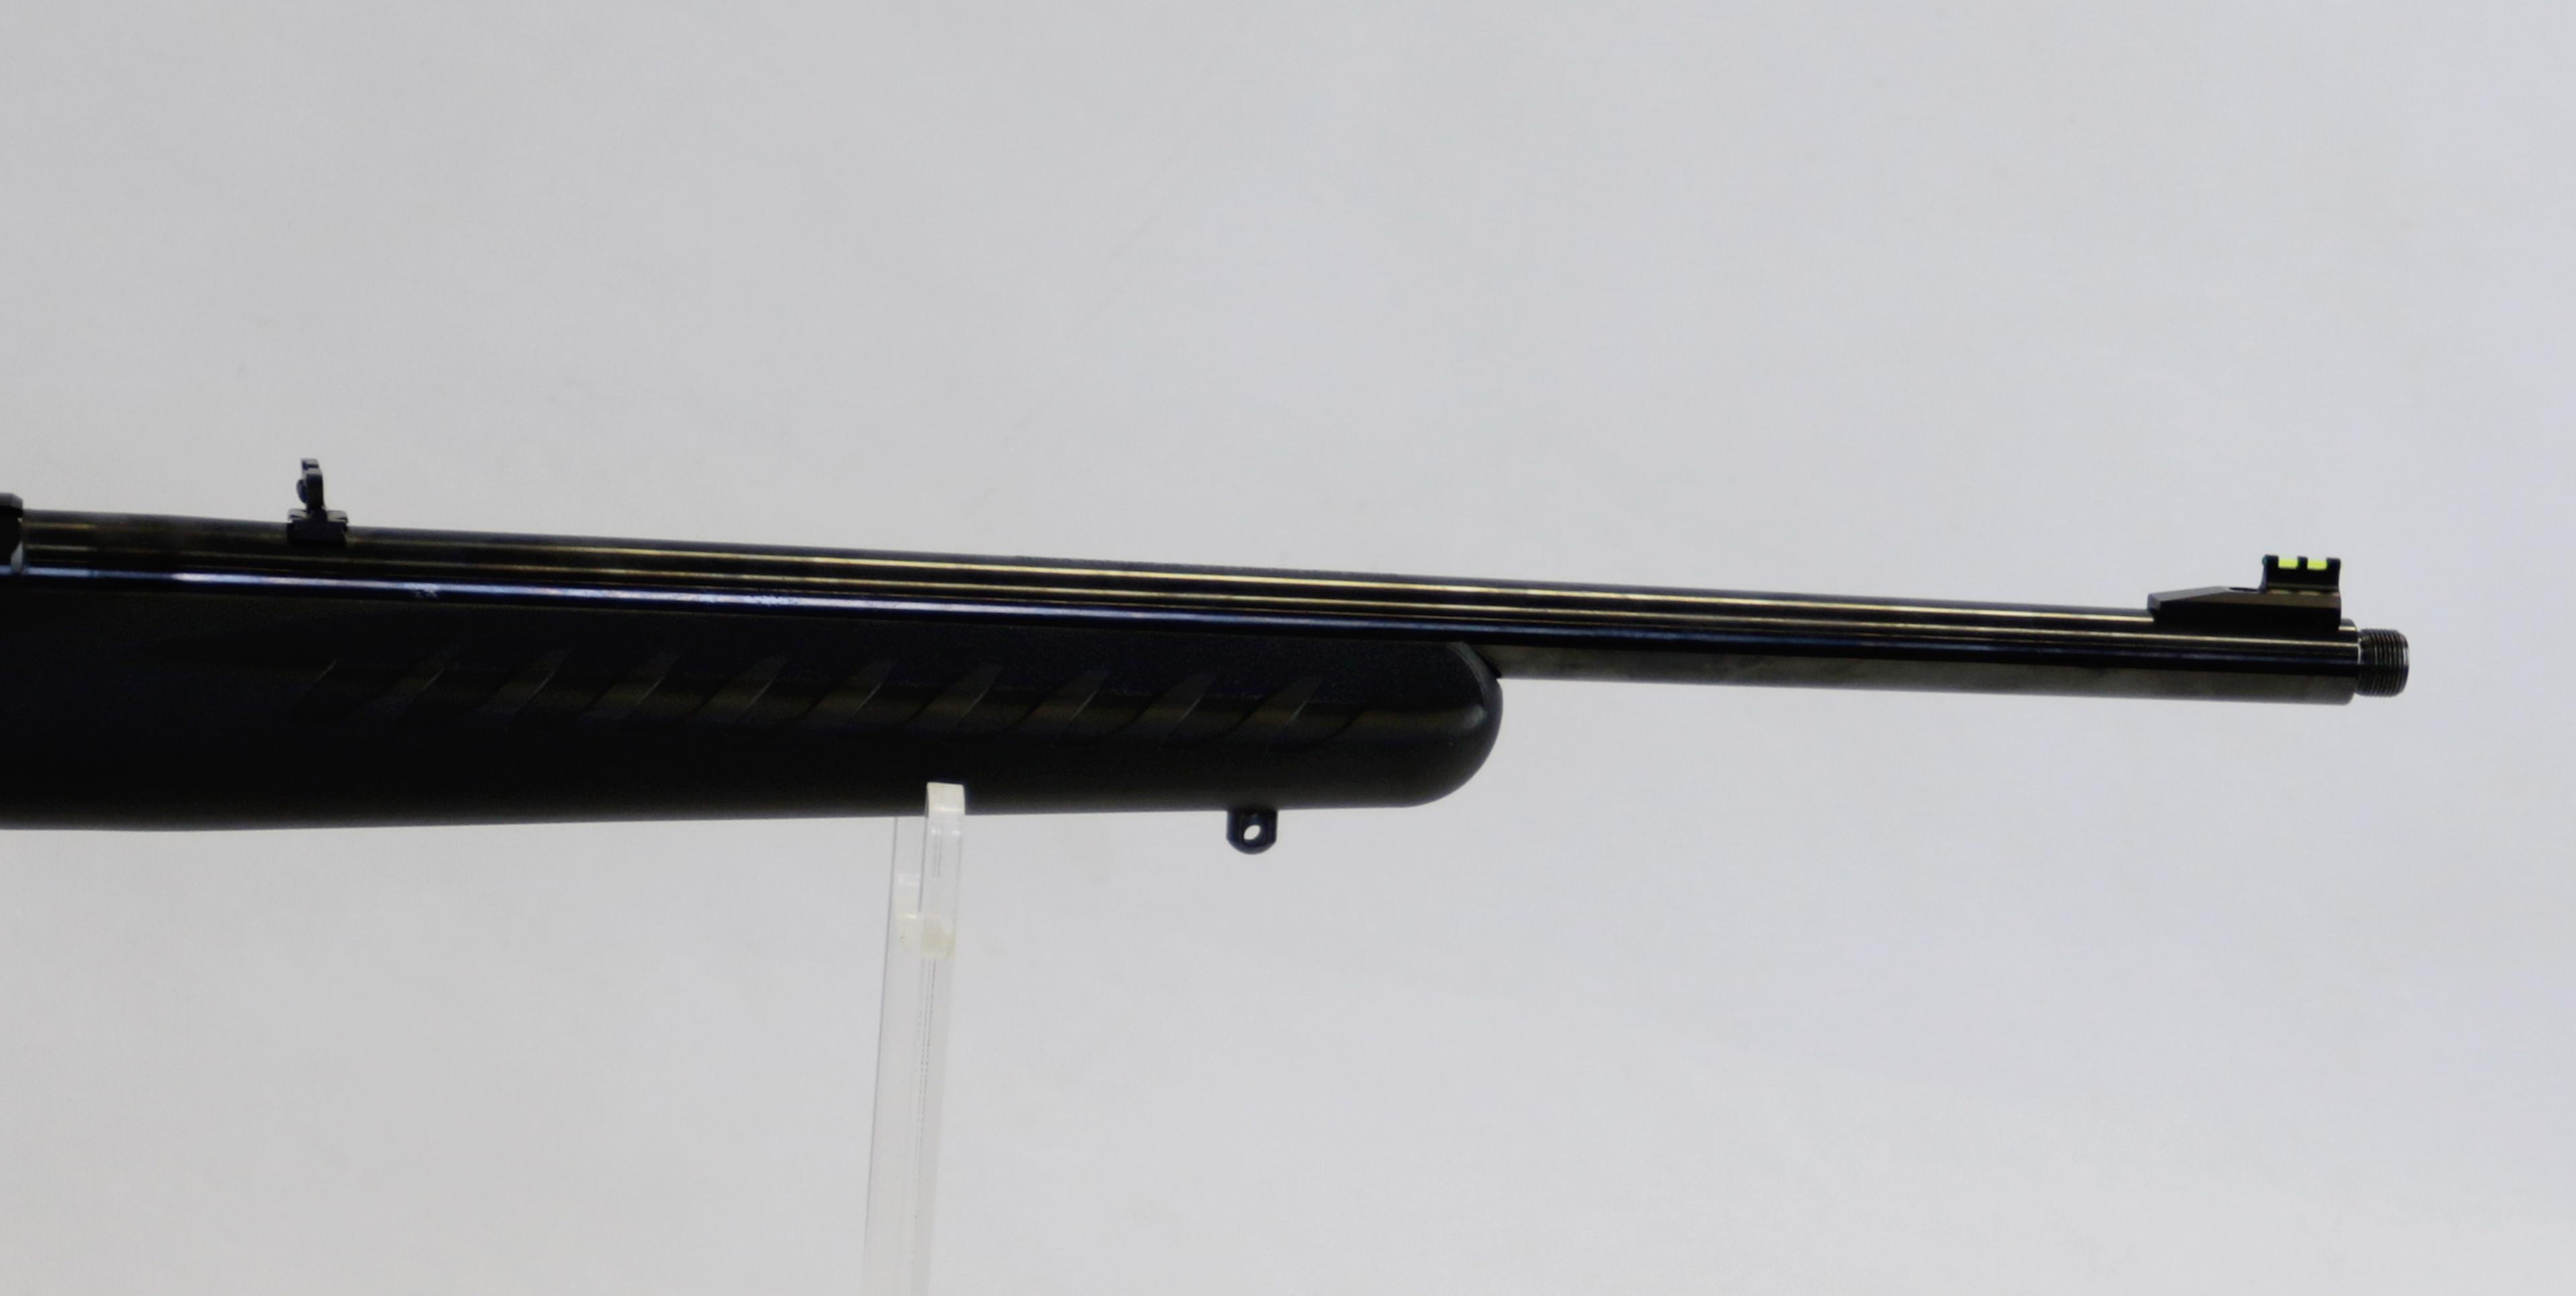 Ruger model American 22 LR cal bolt action rifle